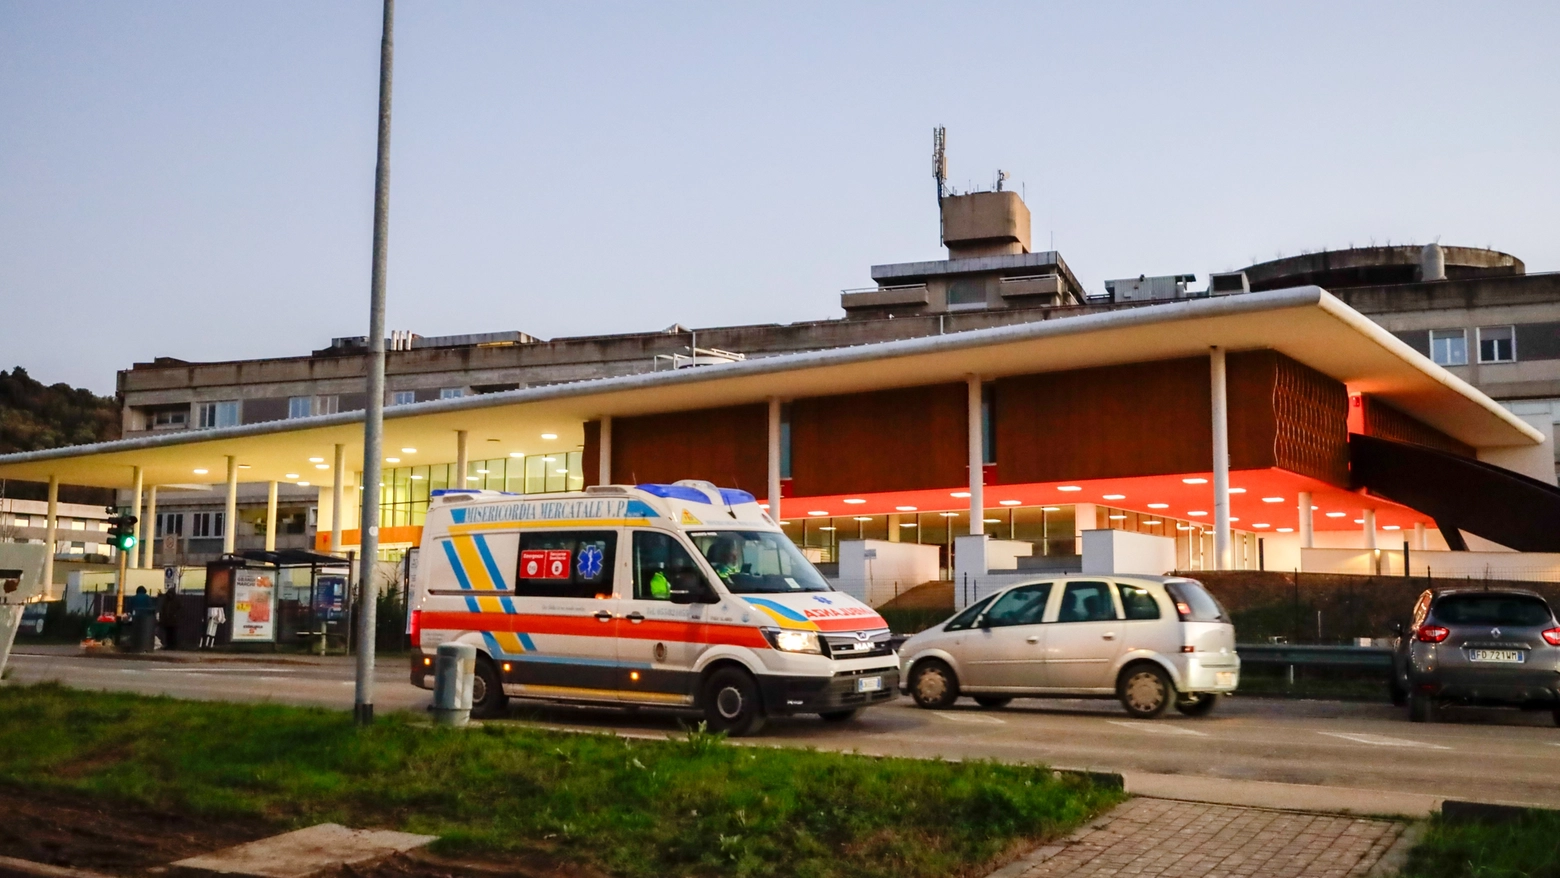 L'ospedale di Ponte a Niccheri (Foto Germogli)